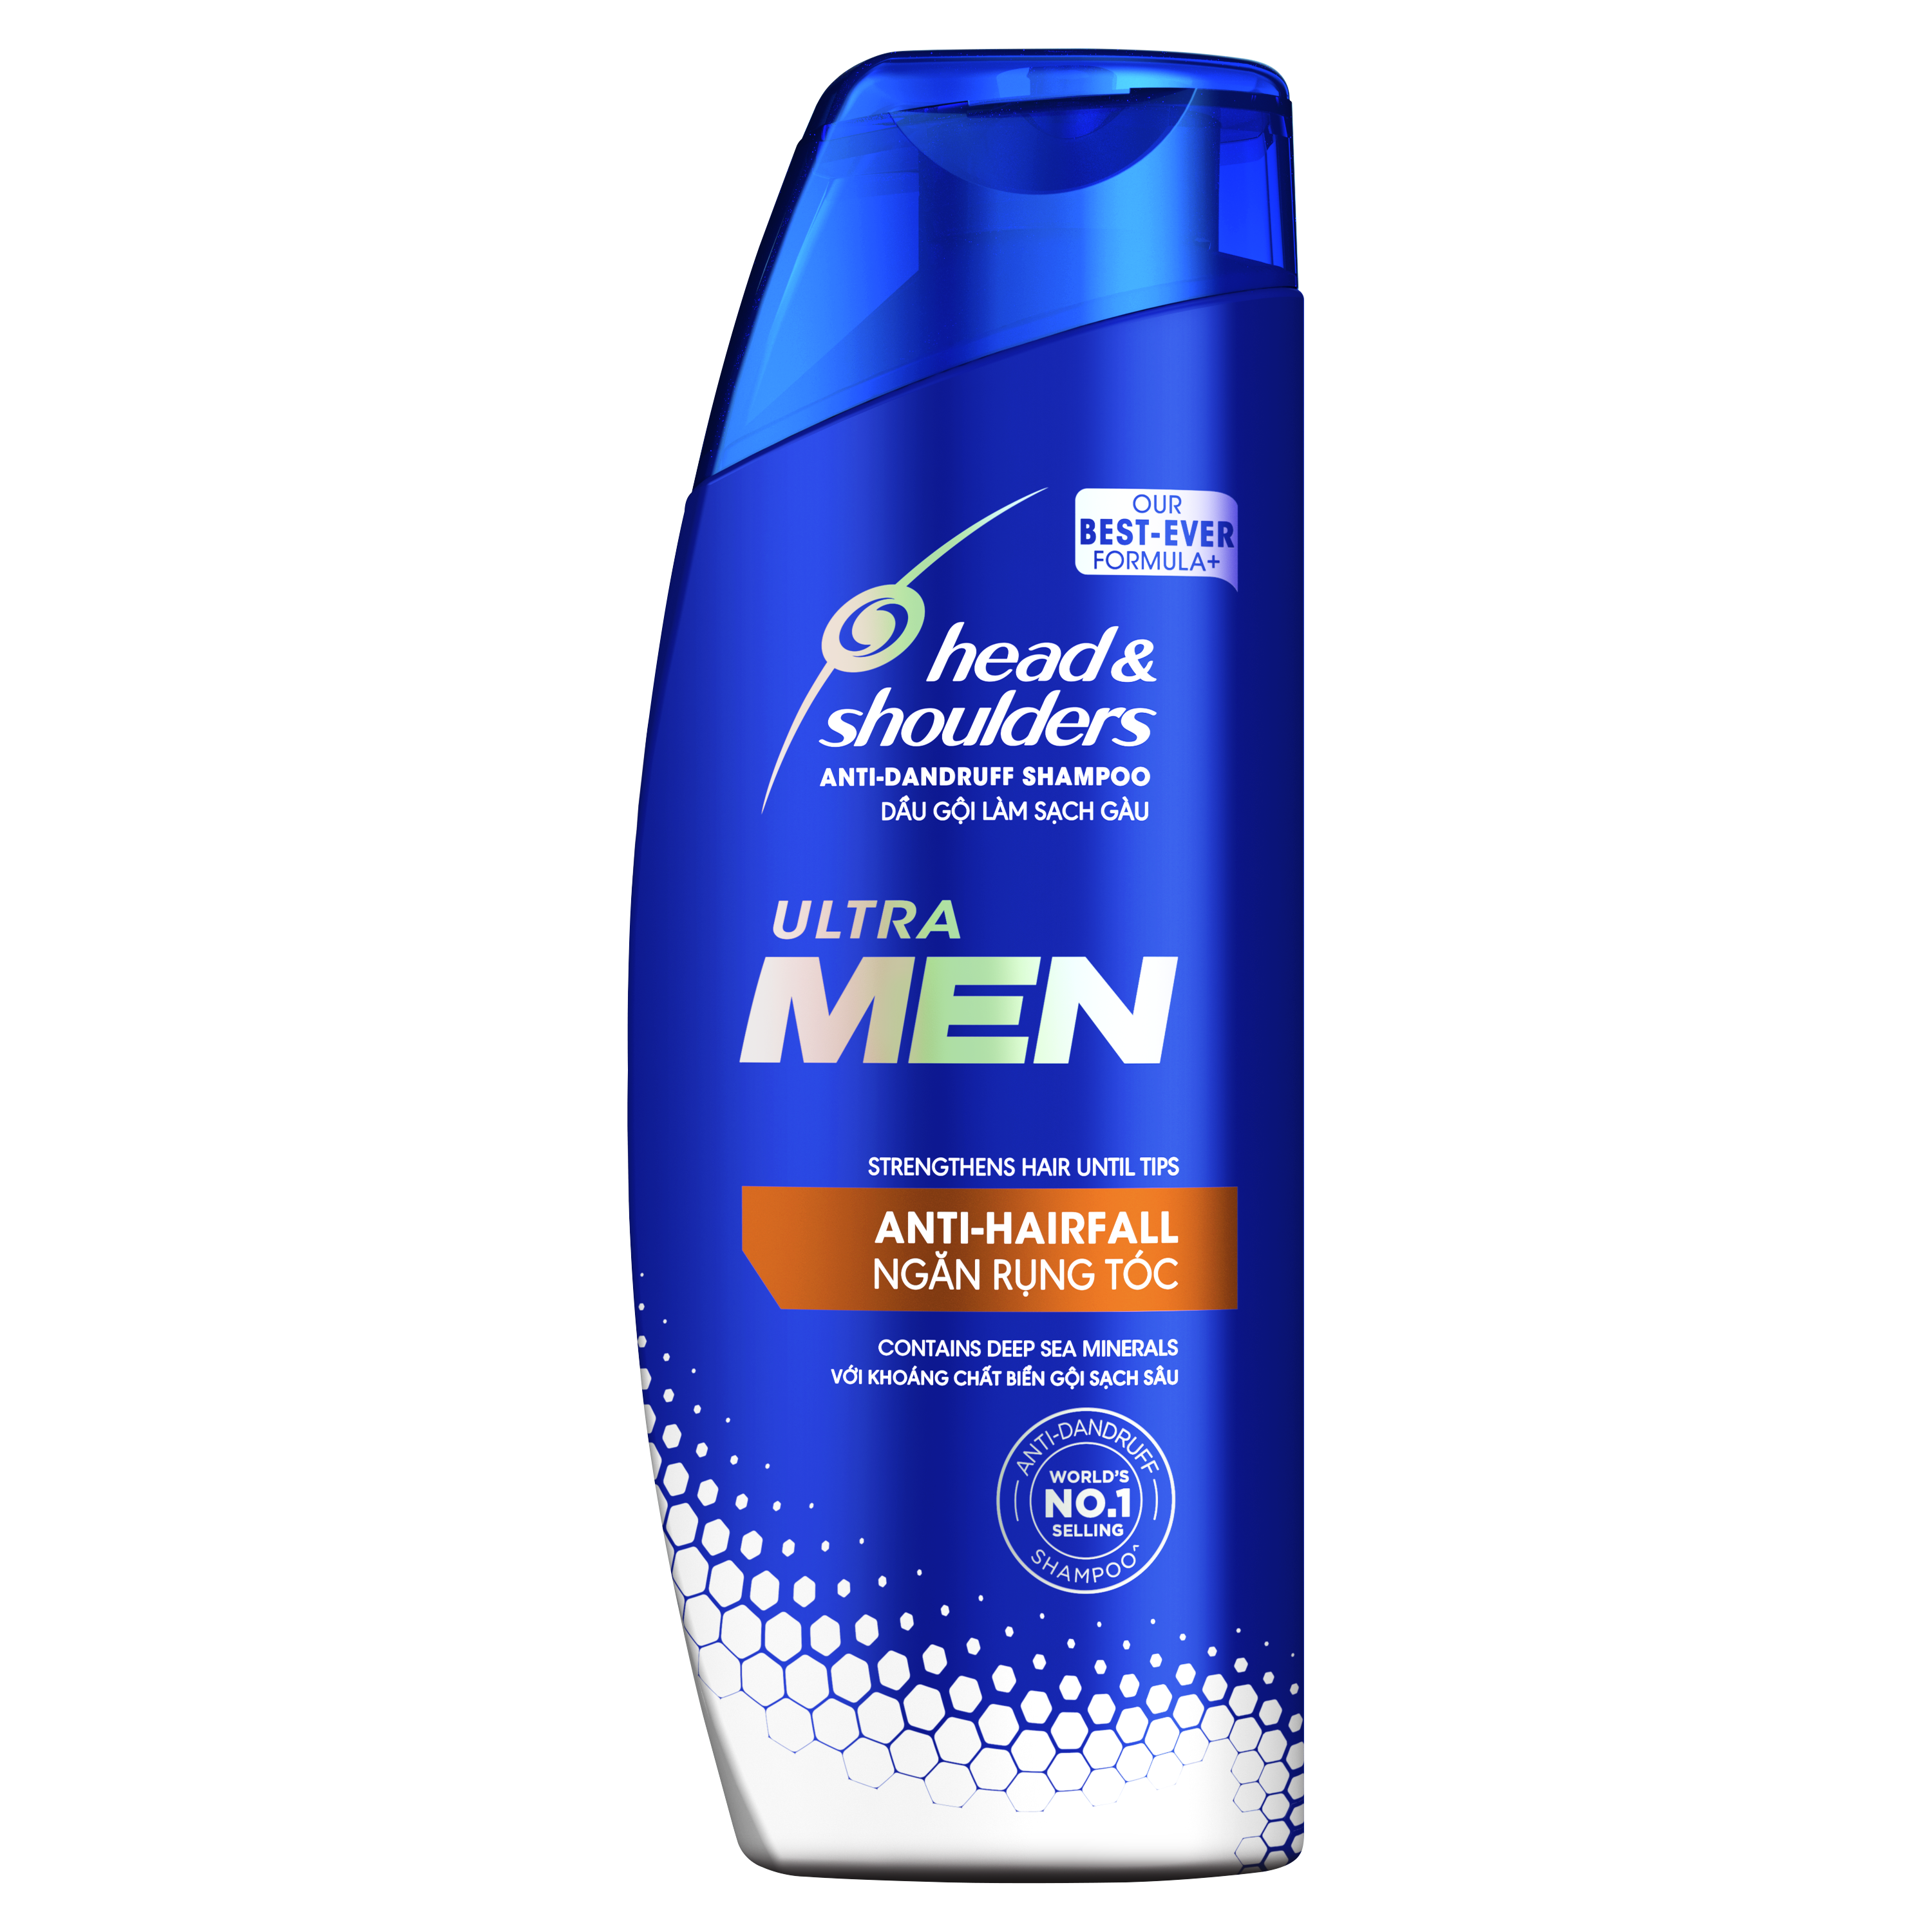 Anti-Dandruff Shampoo- UltraMen Anti-Hairfall